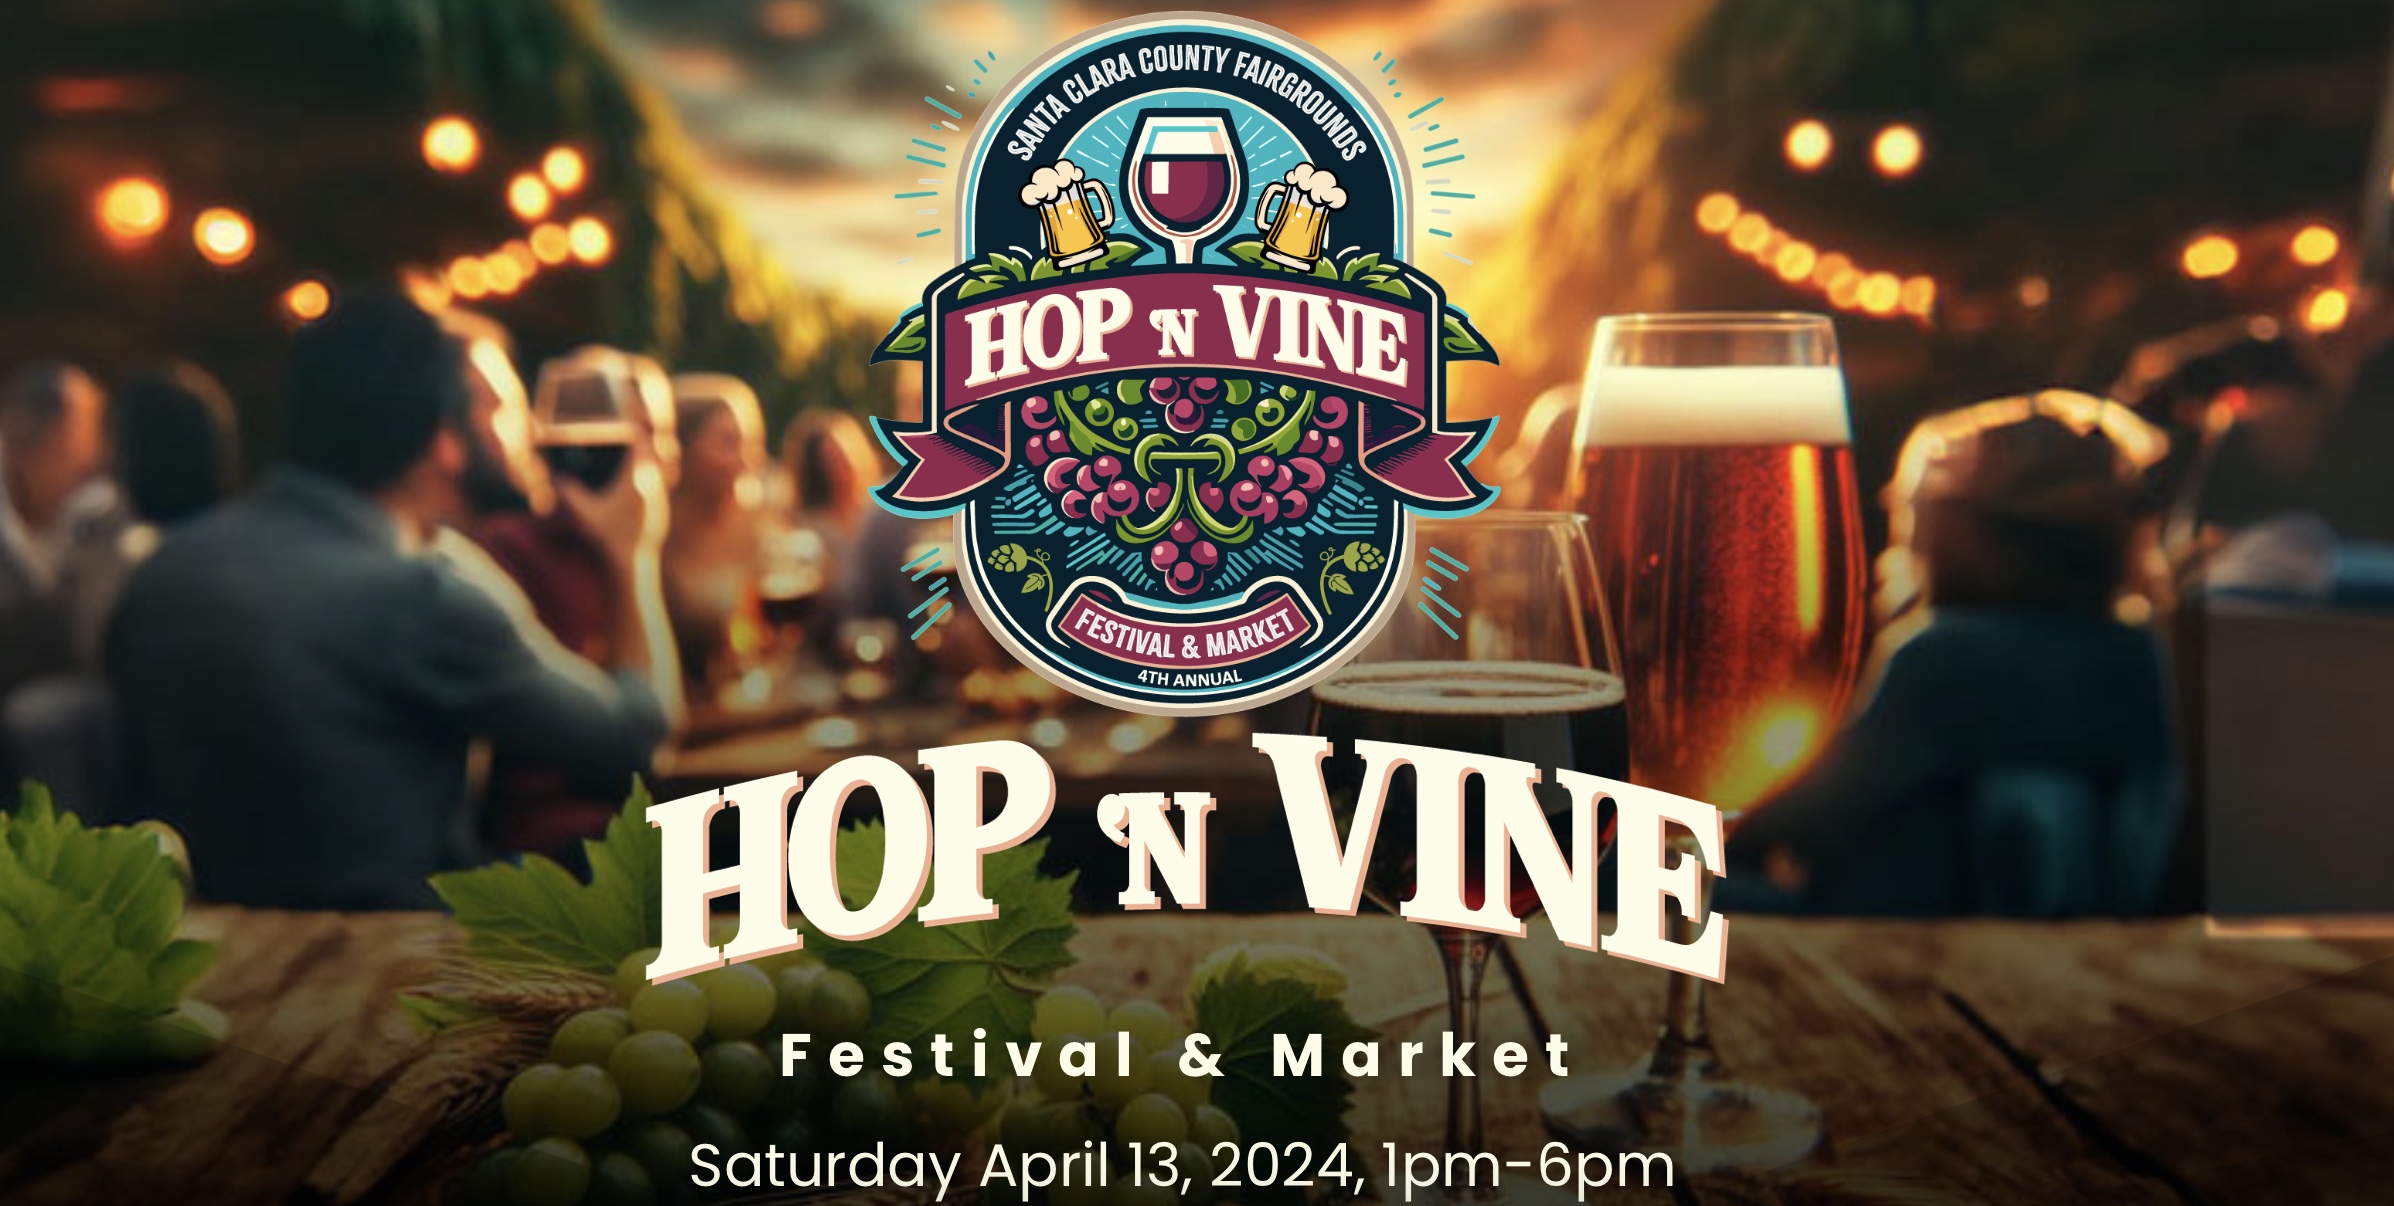 Hop N' Vine Festival & Market